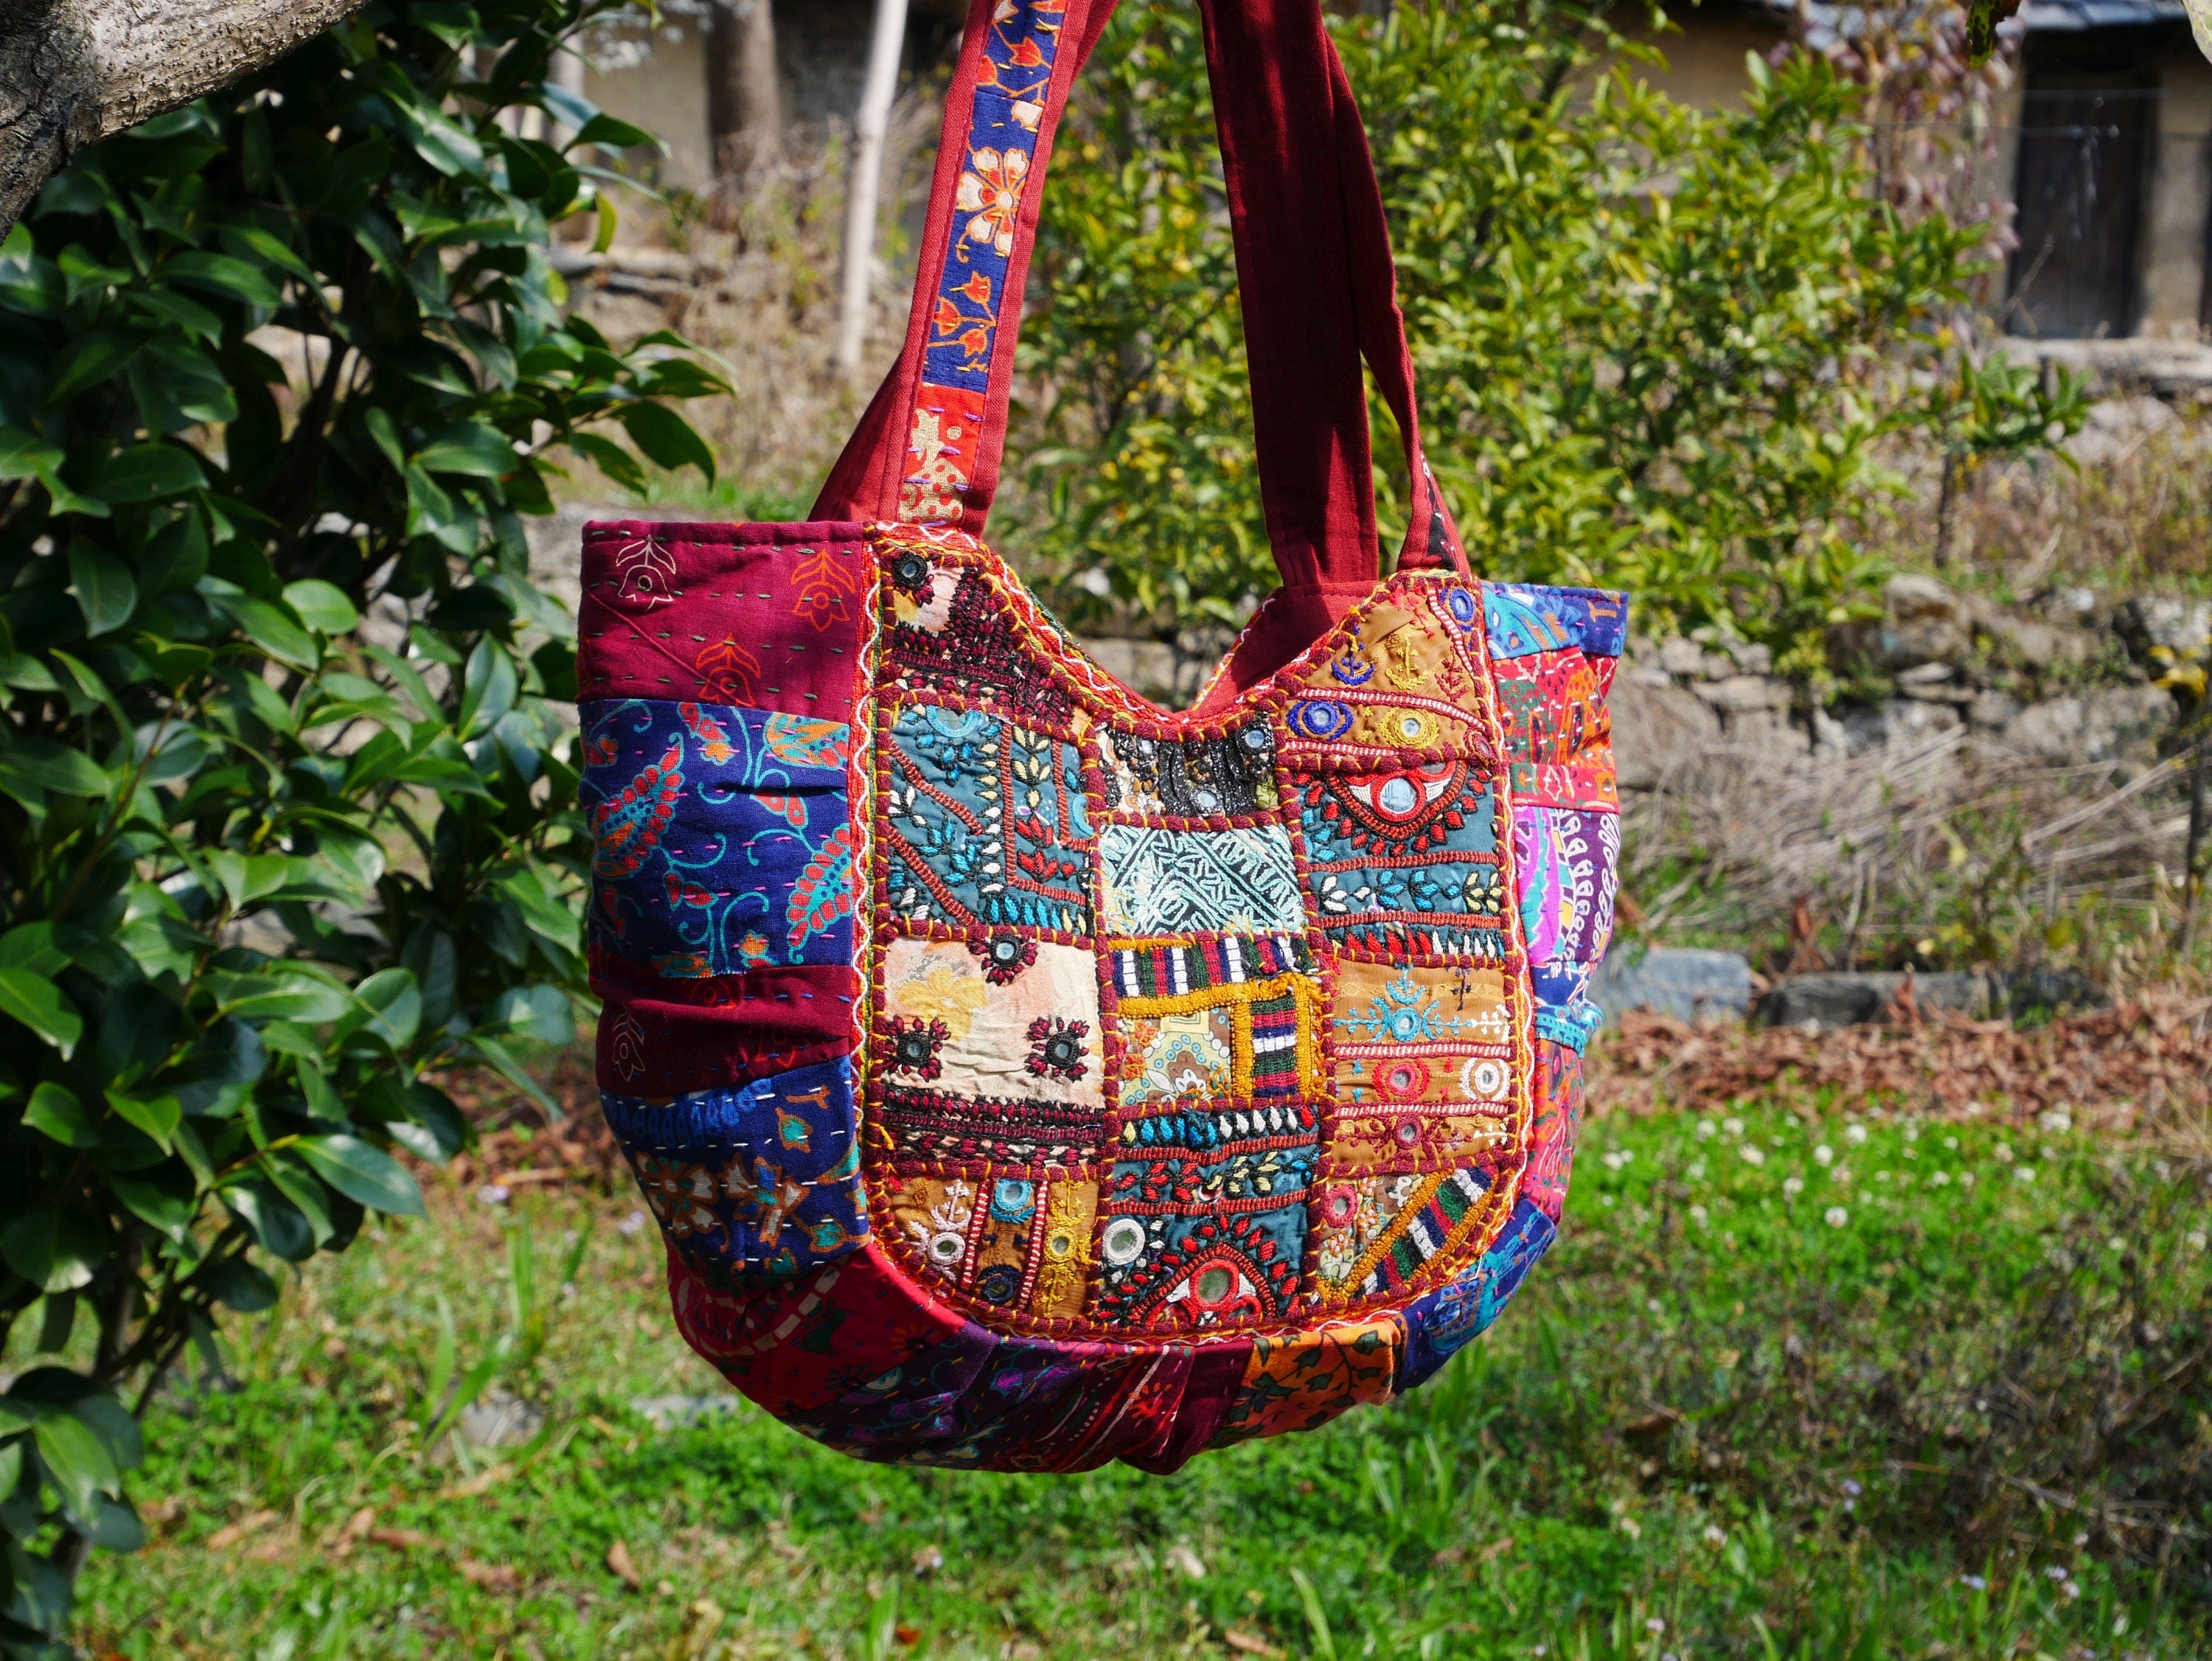 bag, purse, colorful, little coins, gypsy, hippie, boho chic, boho